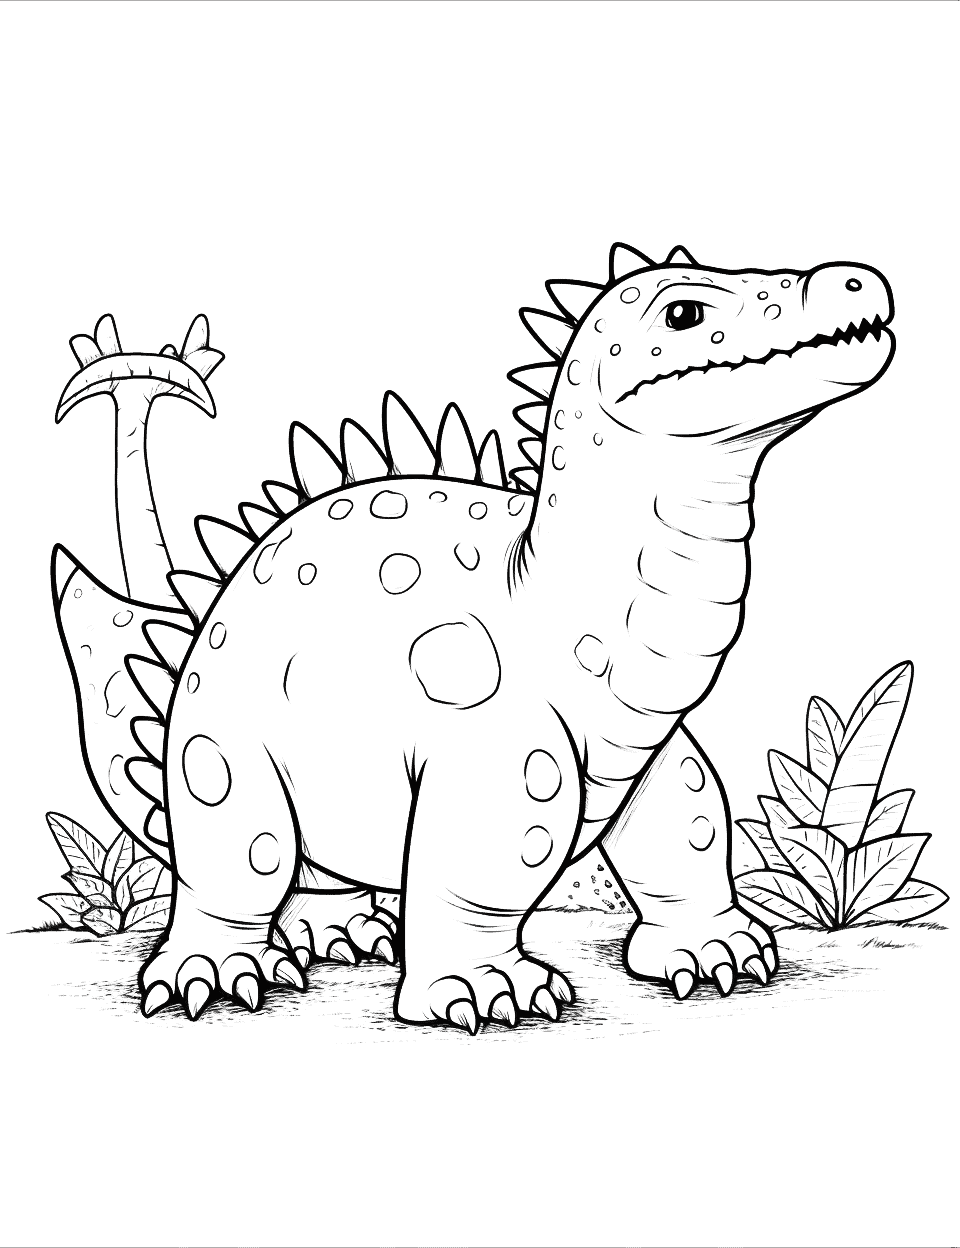 Ankylosaurus Defense Dinosaur Coloring Page - An Ankylosaurus using its tail club to defend against a predator.